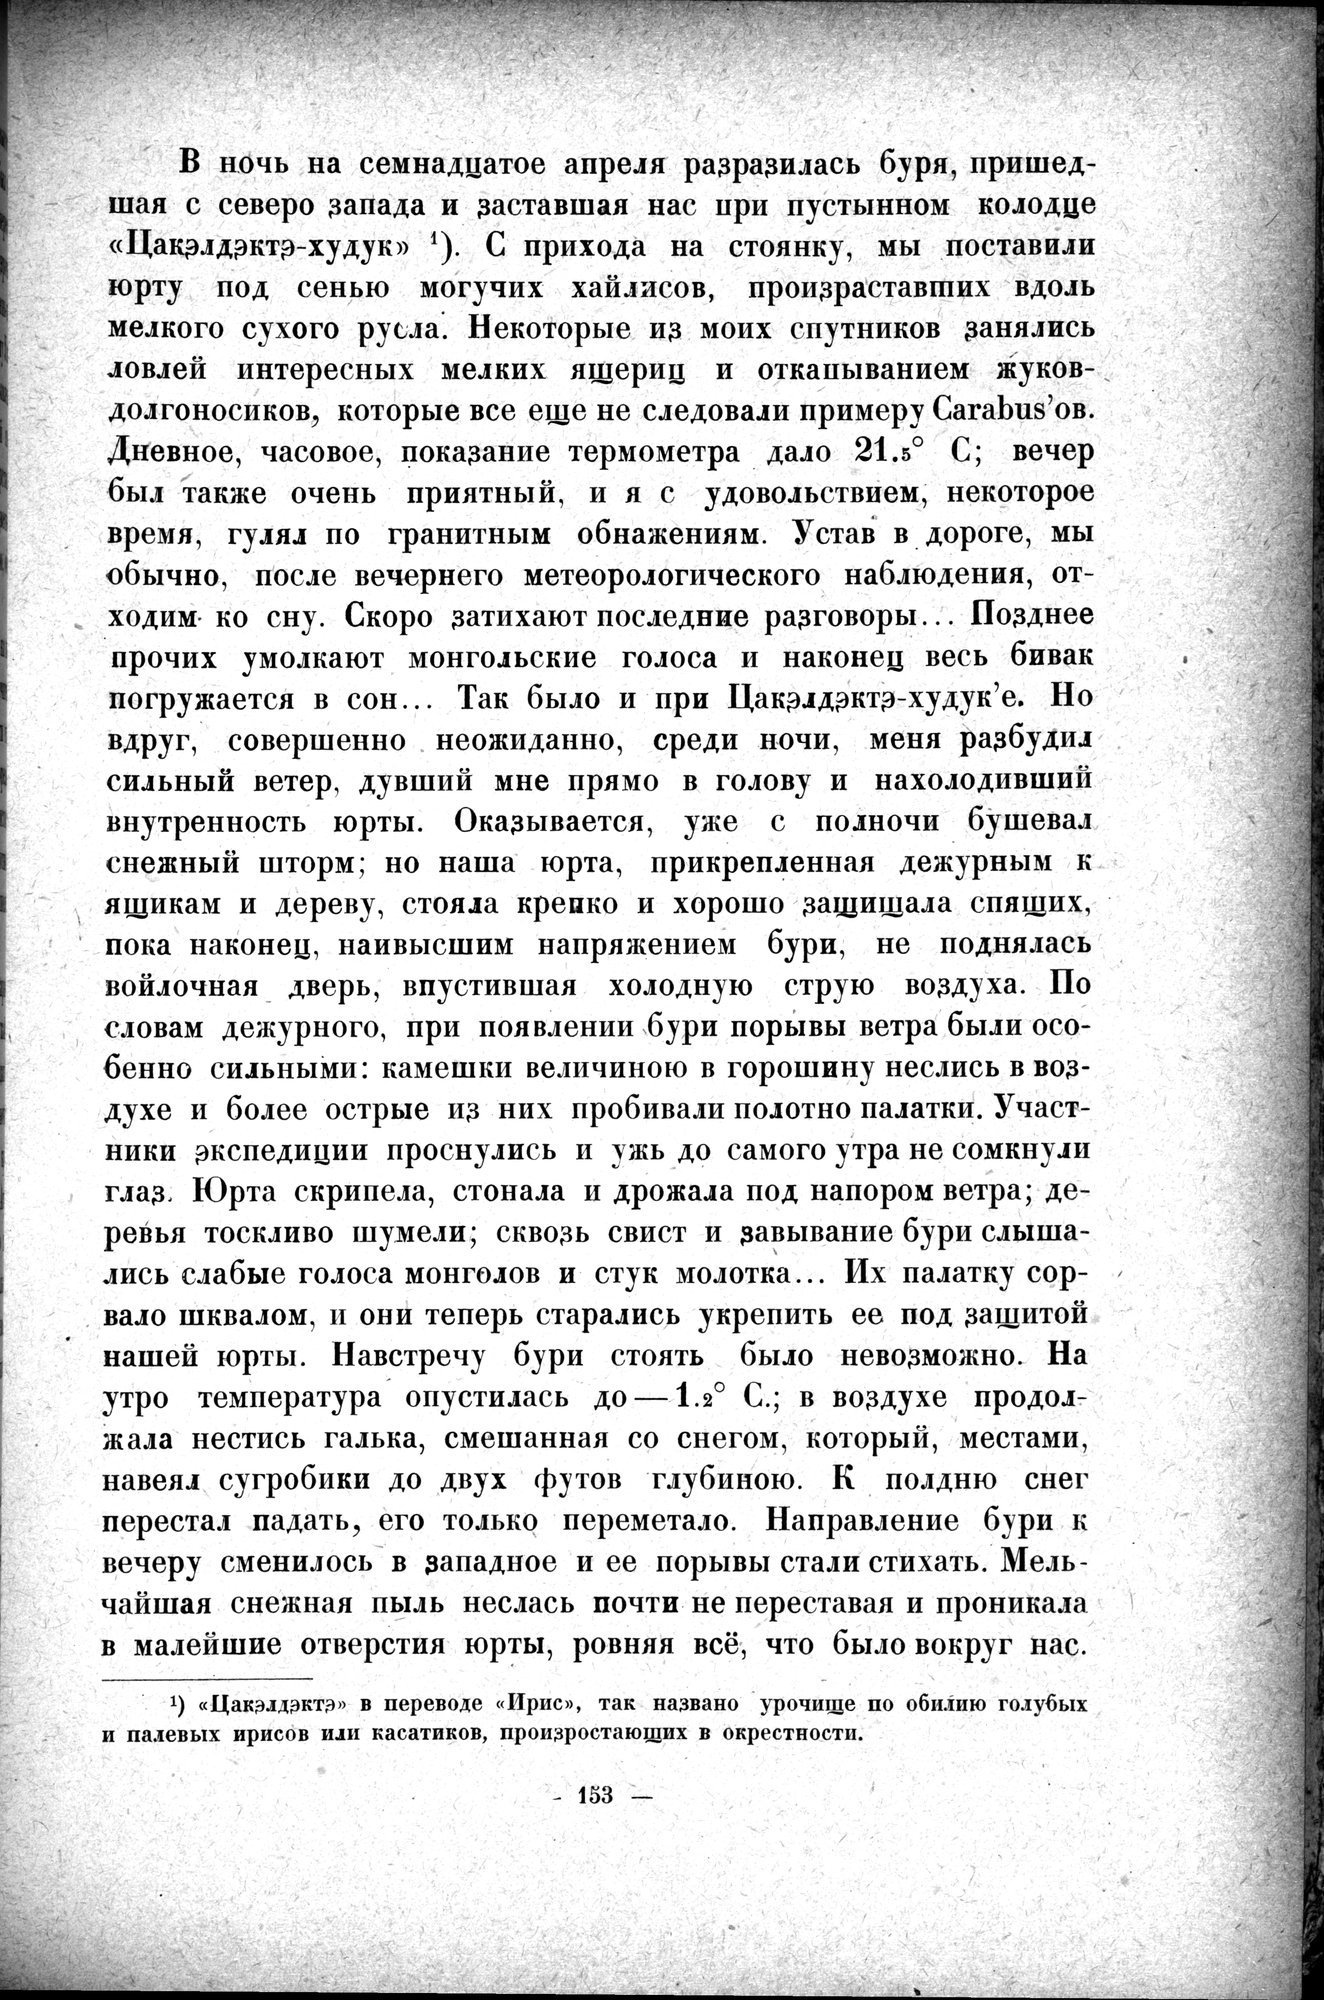 Mongoliya i Amdo i mertby gorod Khara-Khoto : vol.1 / Page 181 (Grayscale High Resolution Image)